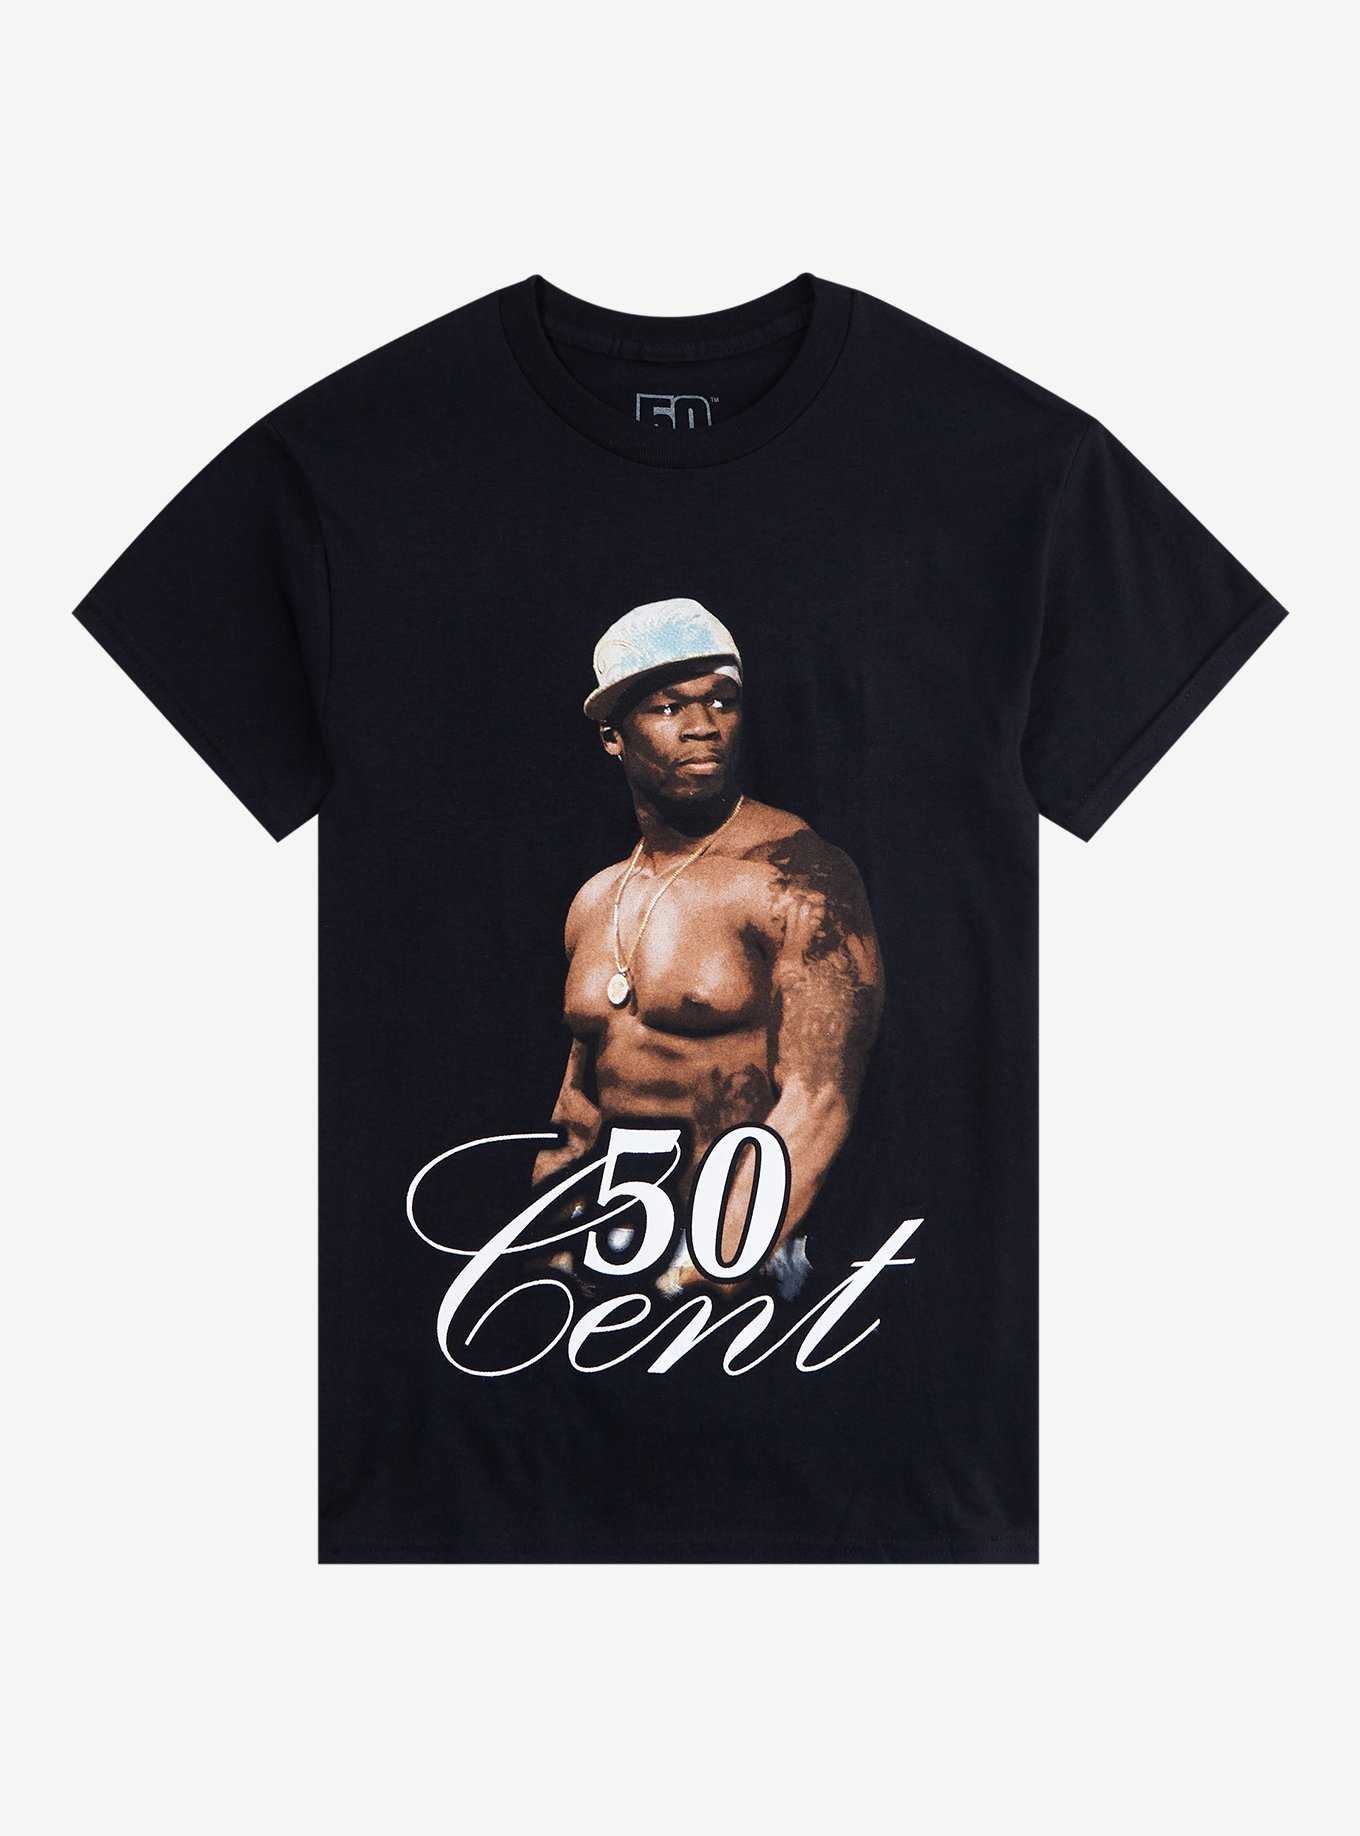 50 Cent Side-Eye Portrait Boyfriend Fit Girls T-Shirt, , hi-res